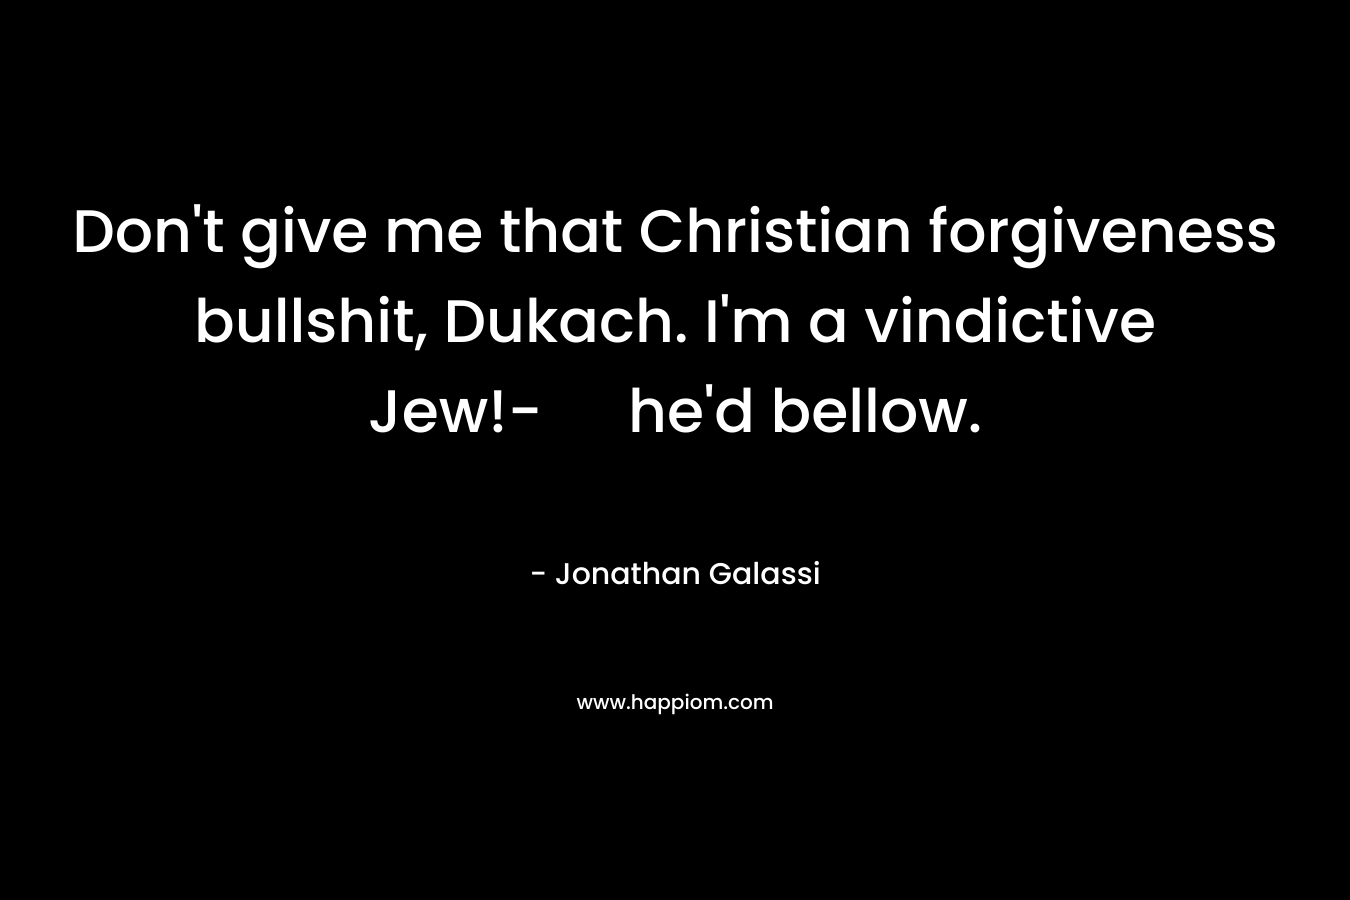 Don't give me that Christian forgiveness bullshit, Dukach. I'm a vindictive Jew!- he'd bellow.